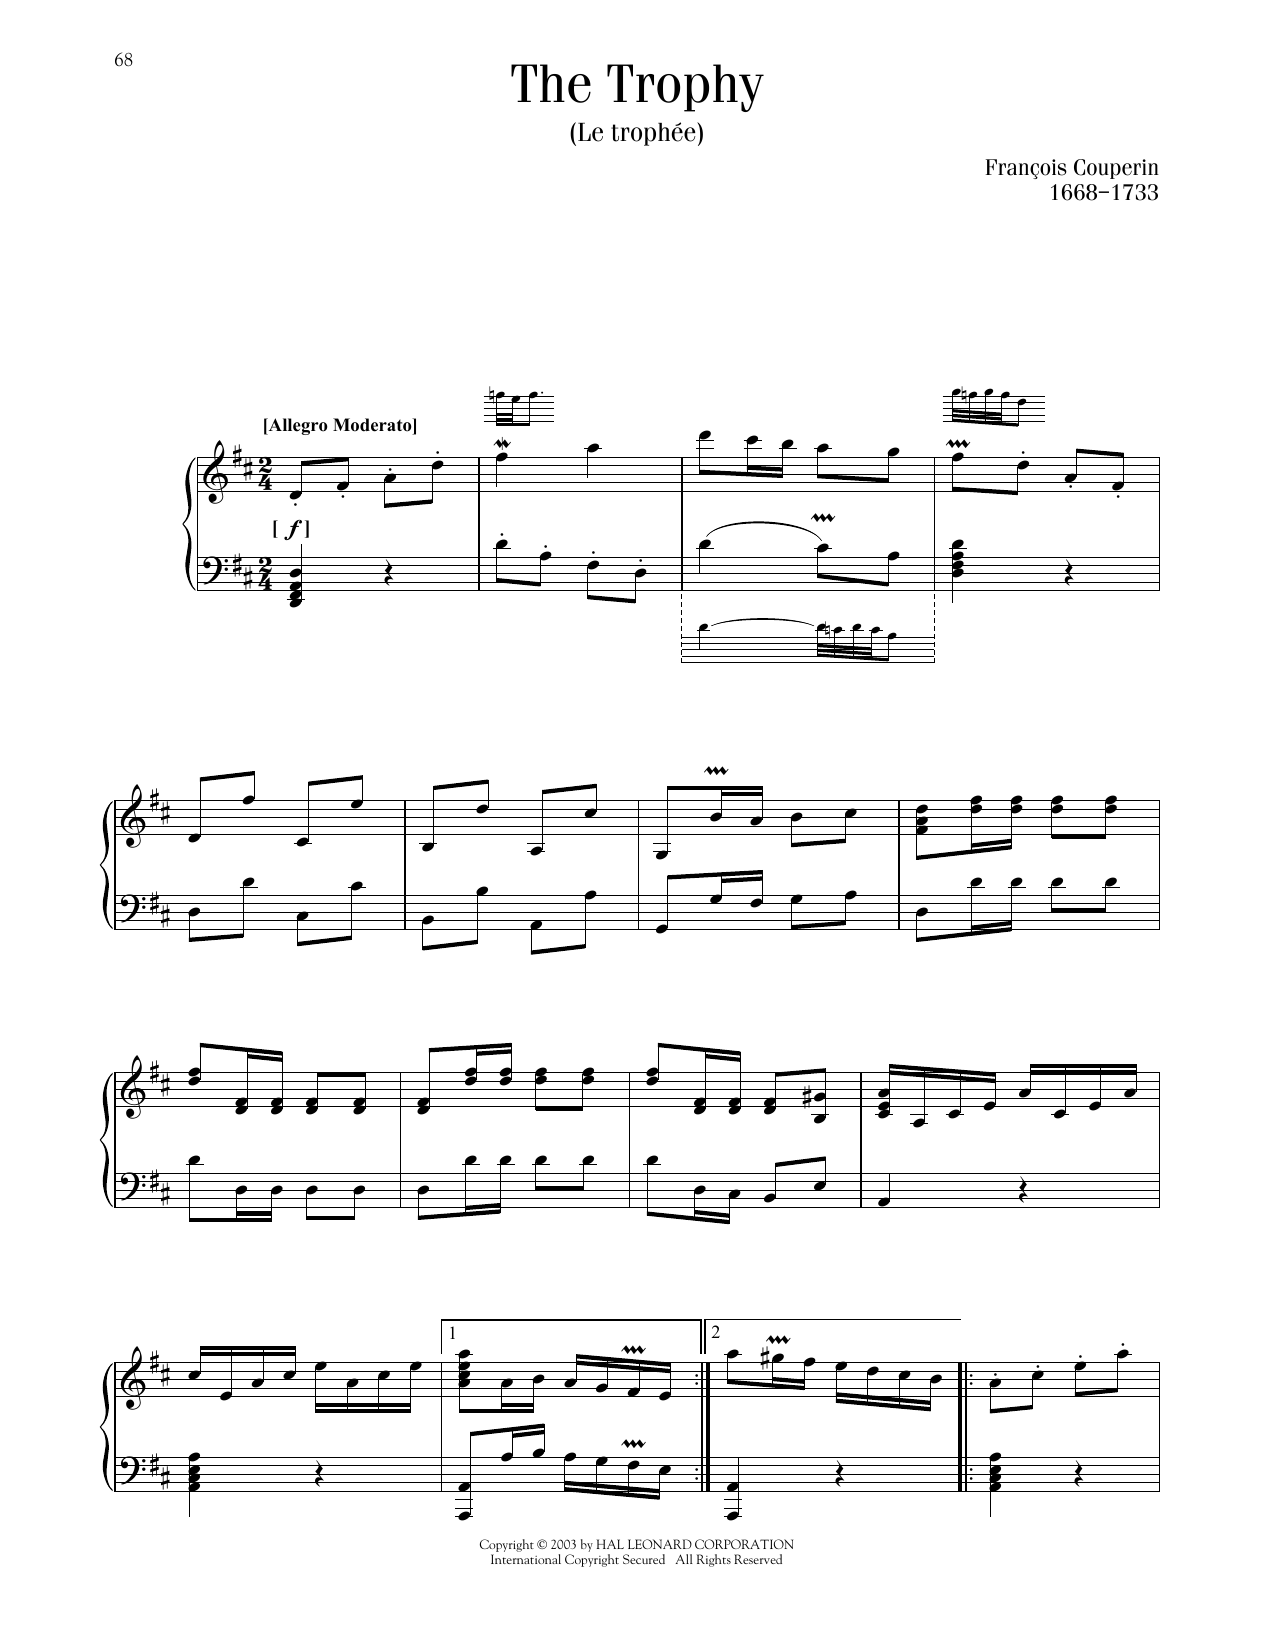 Francois Couperin Le Trophee (The Trophy) sheet music notes printable PDF score